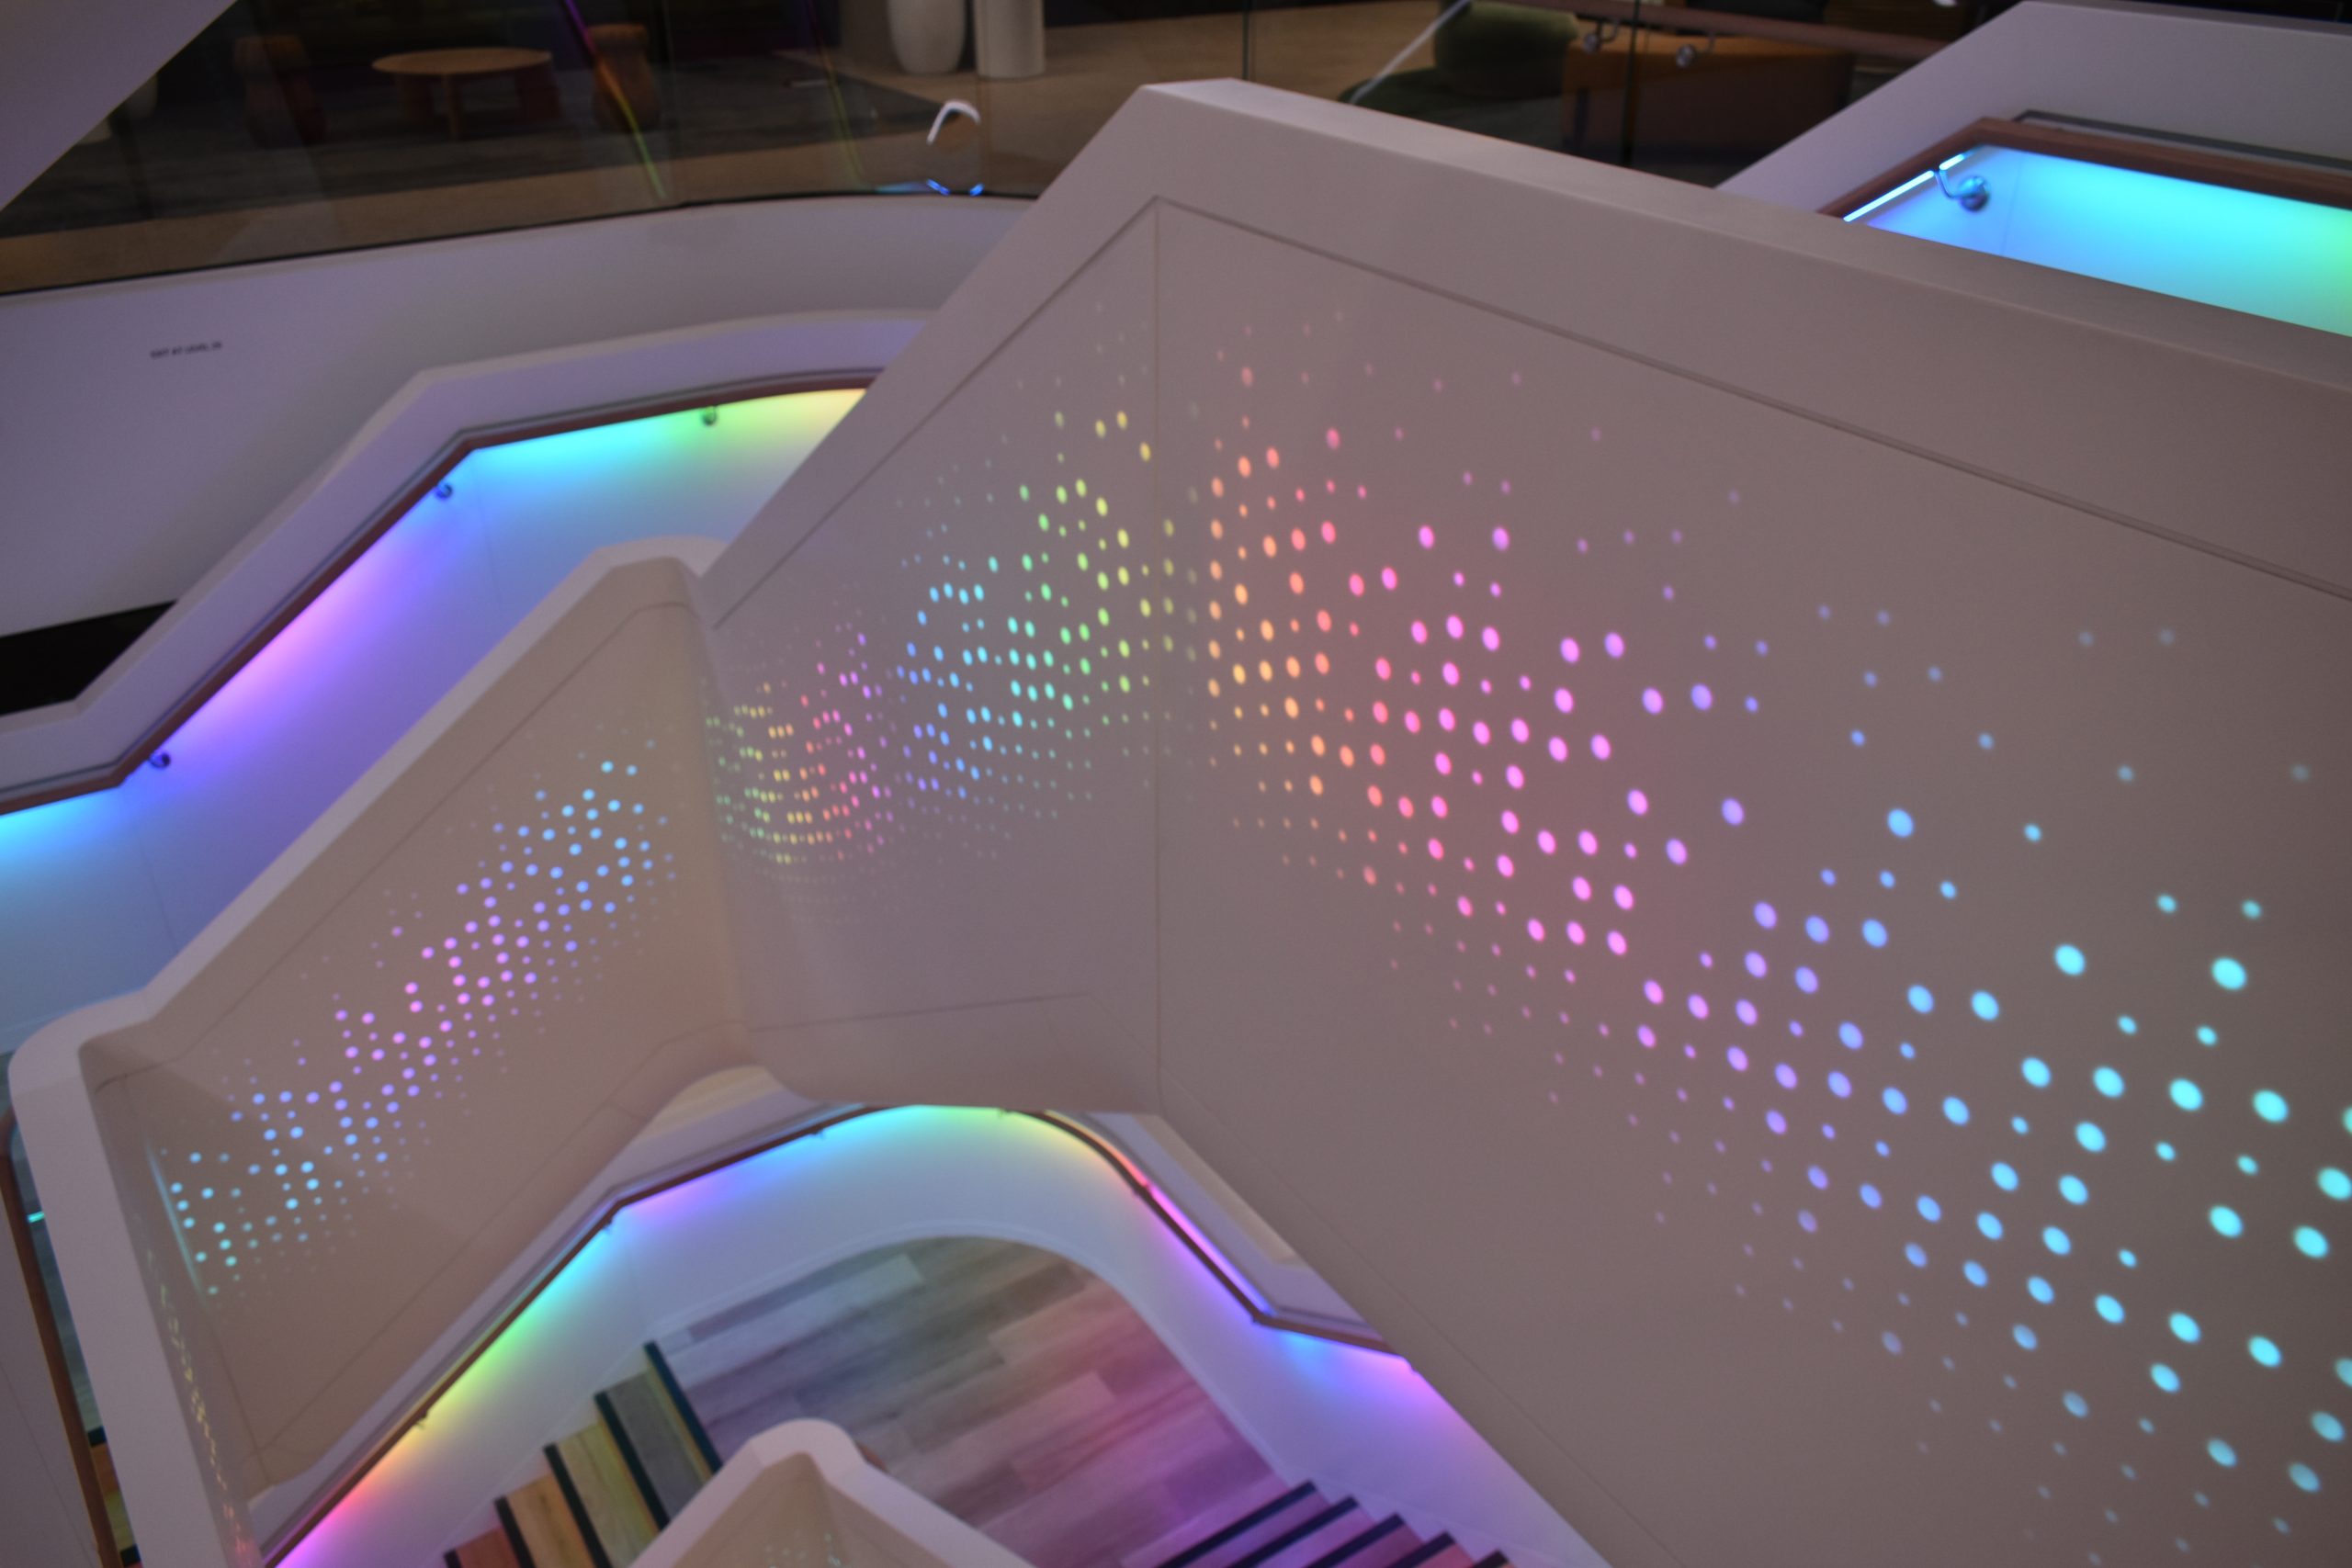 Microsoft stairwell corian staircase intelligent lighting feature lighting Sydney RGBW rainbow LED